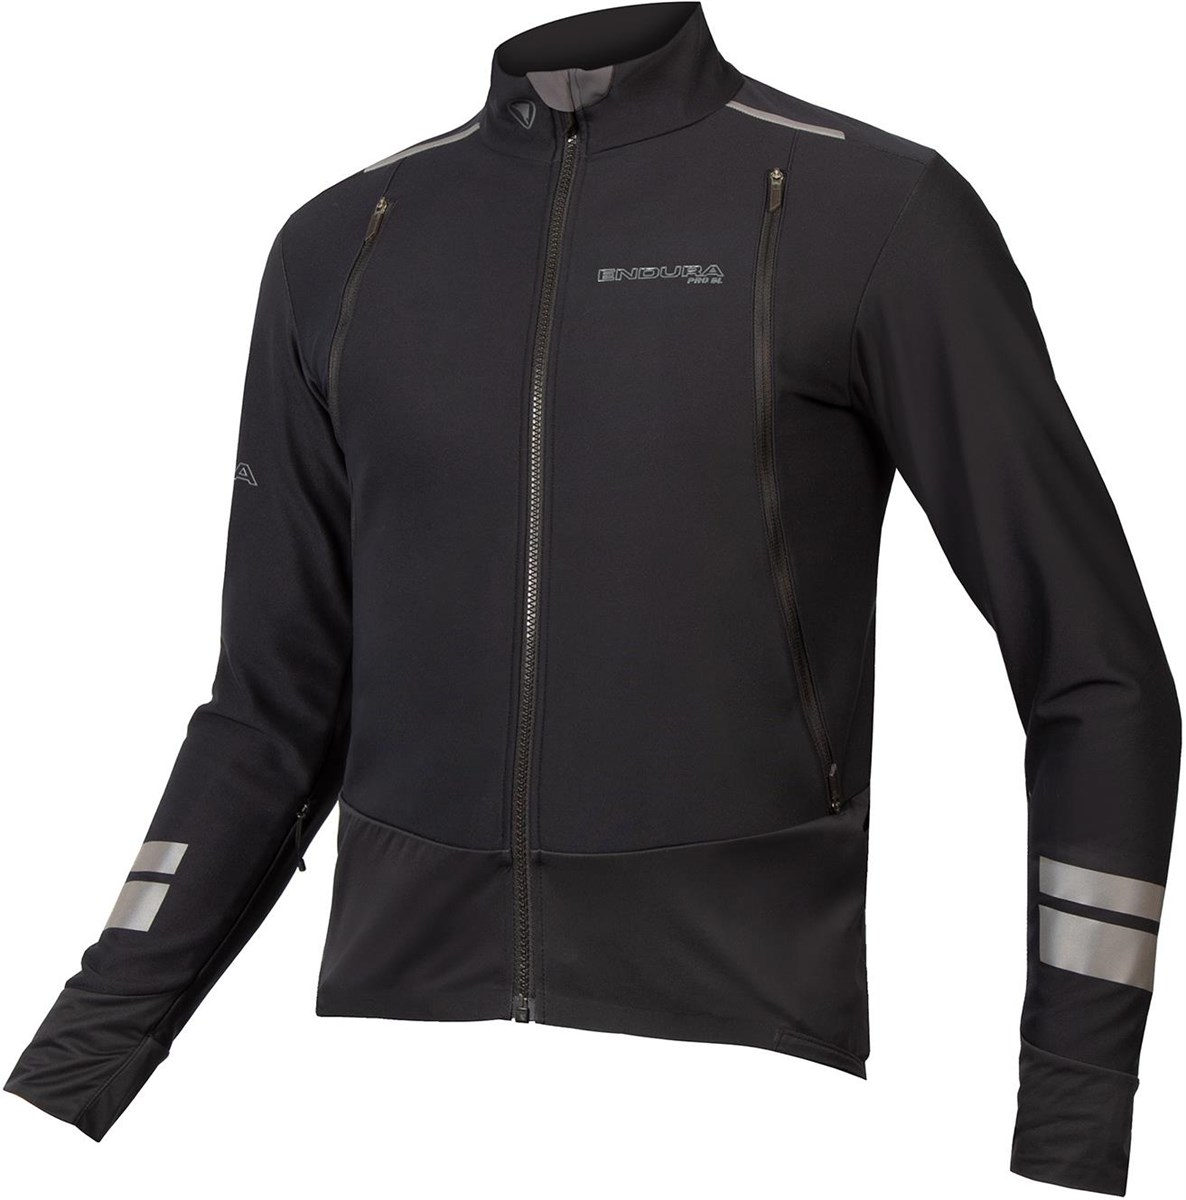 Endura Pro SL All-Weather Cycling Jacket - ExoShell40DR PrimaLoft Gold ...